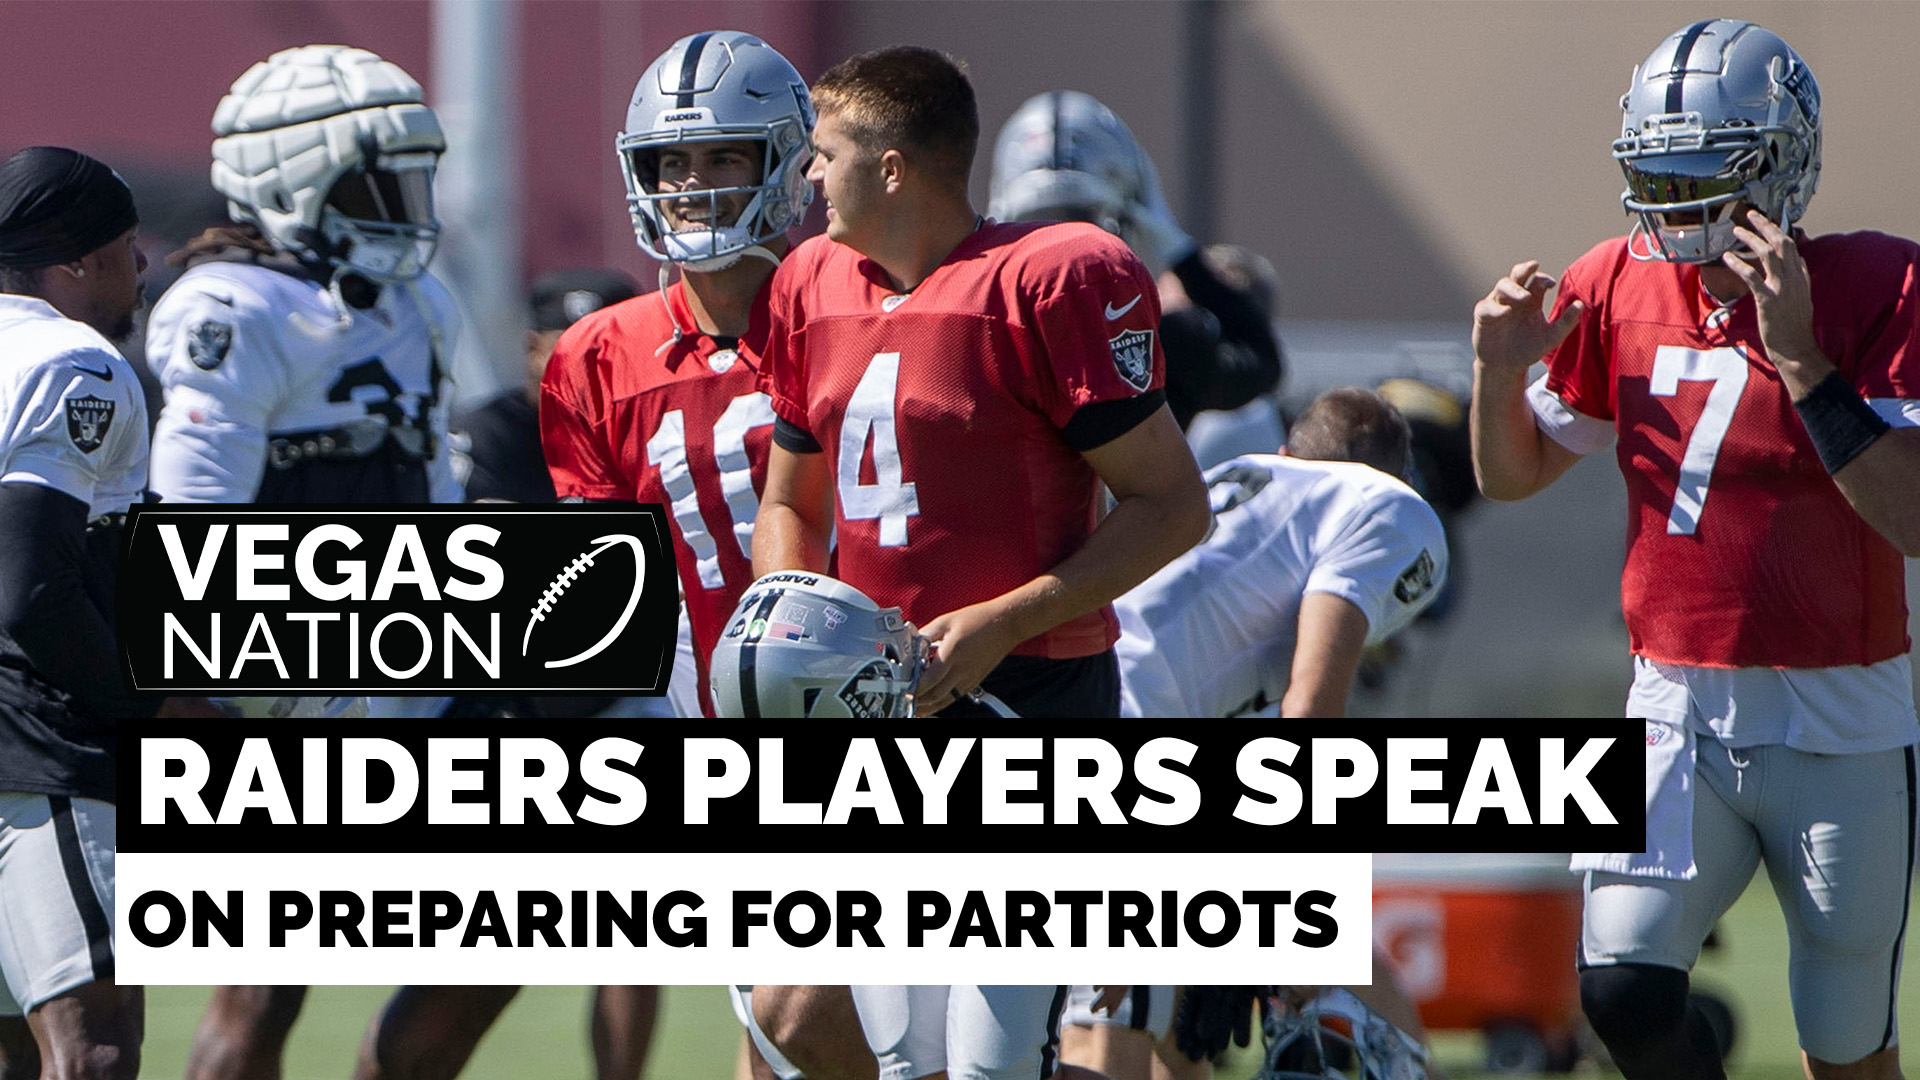 Raiders Players speak on preparing for Patriots